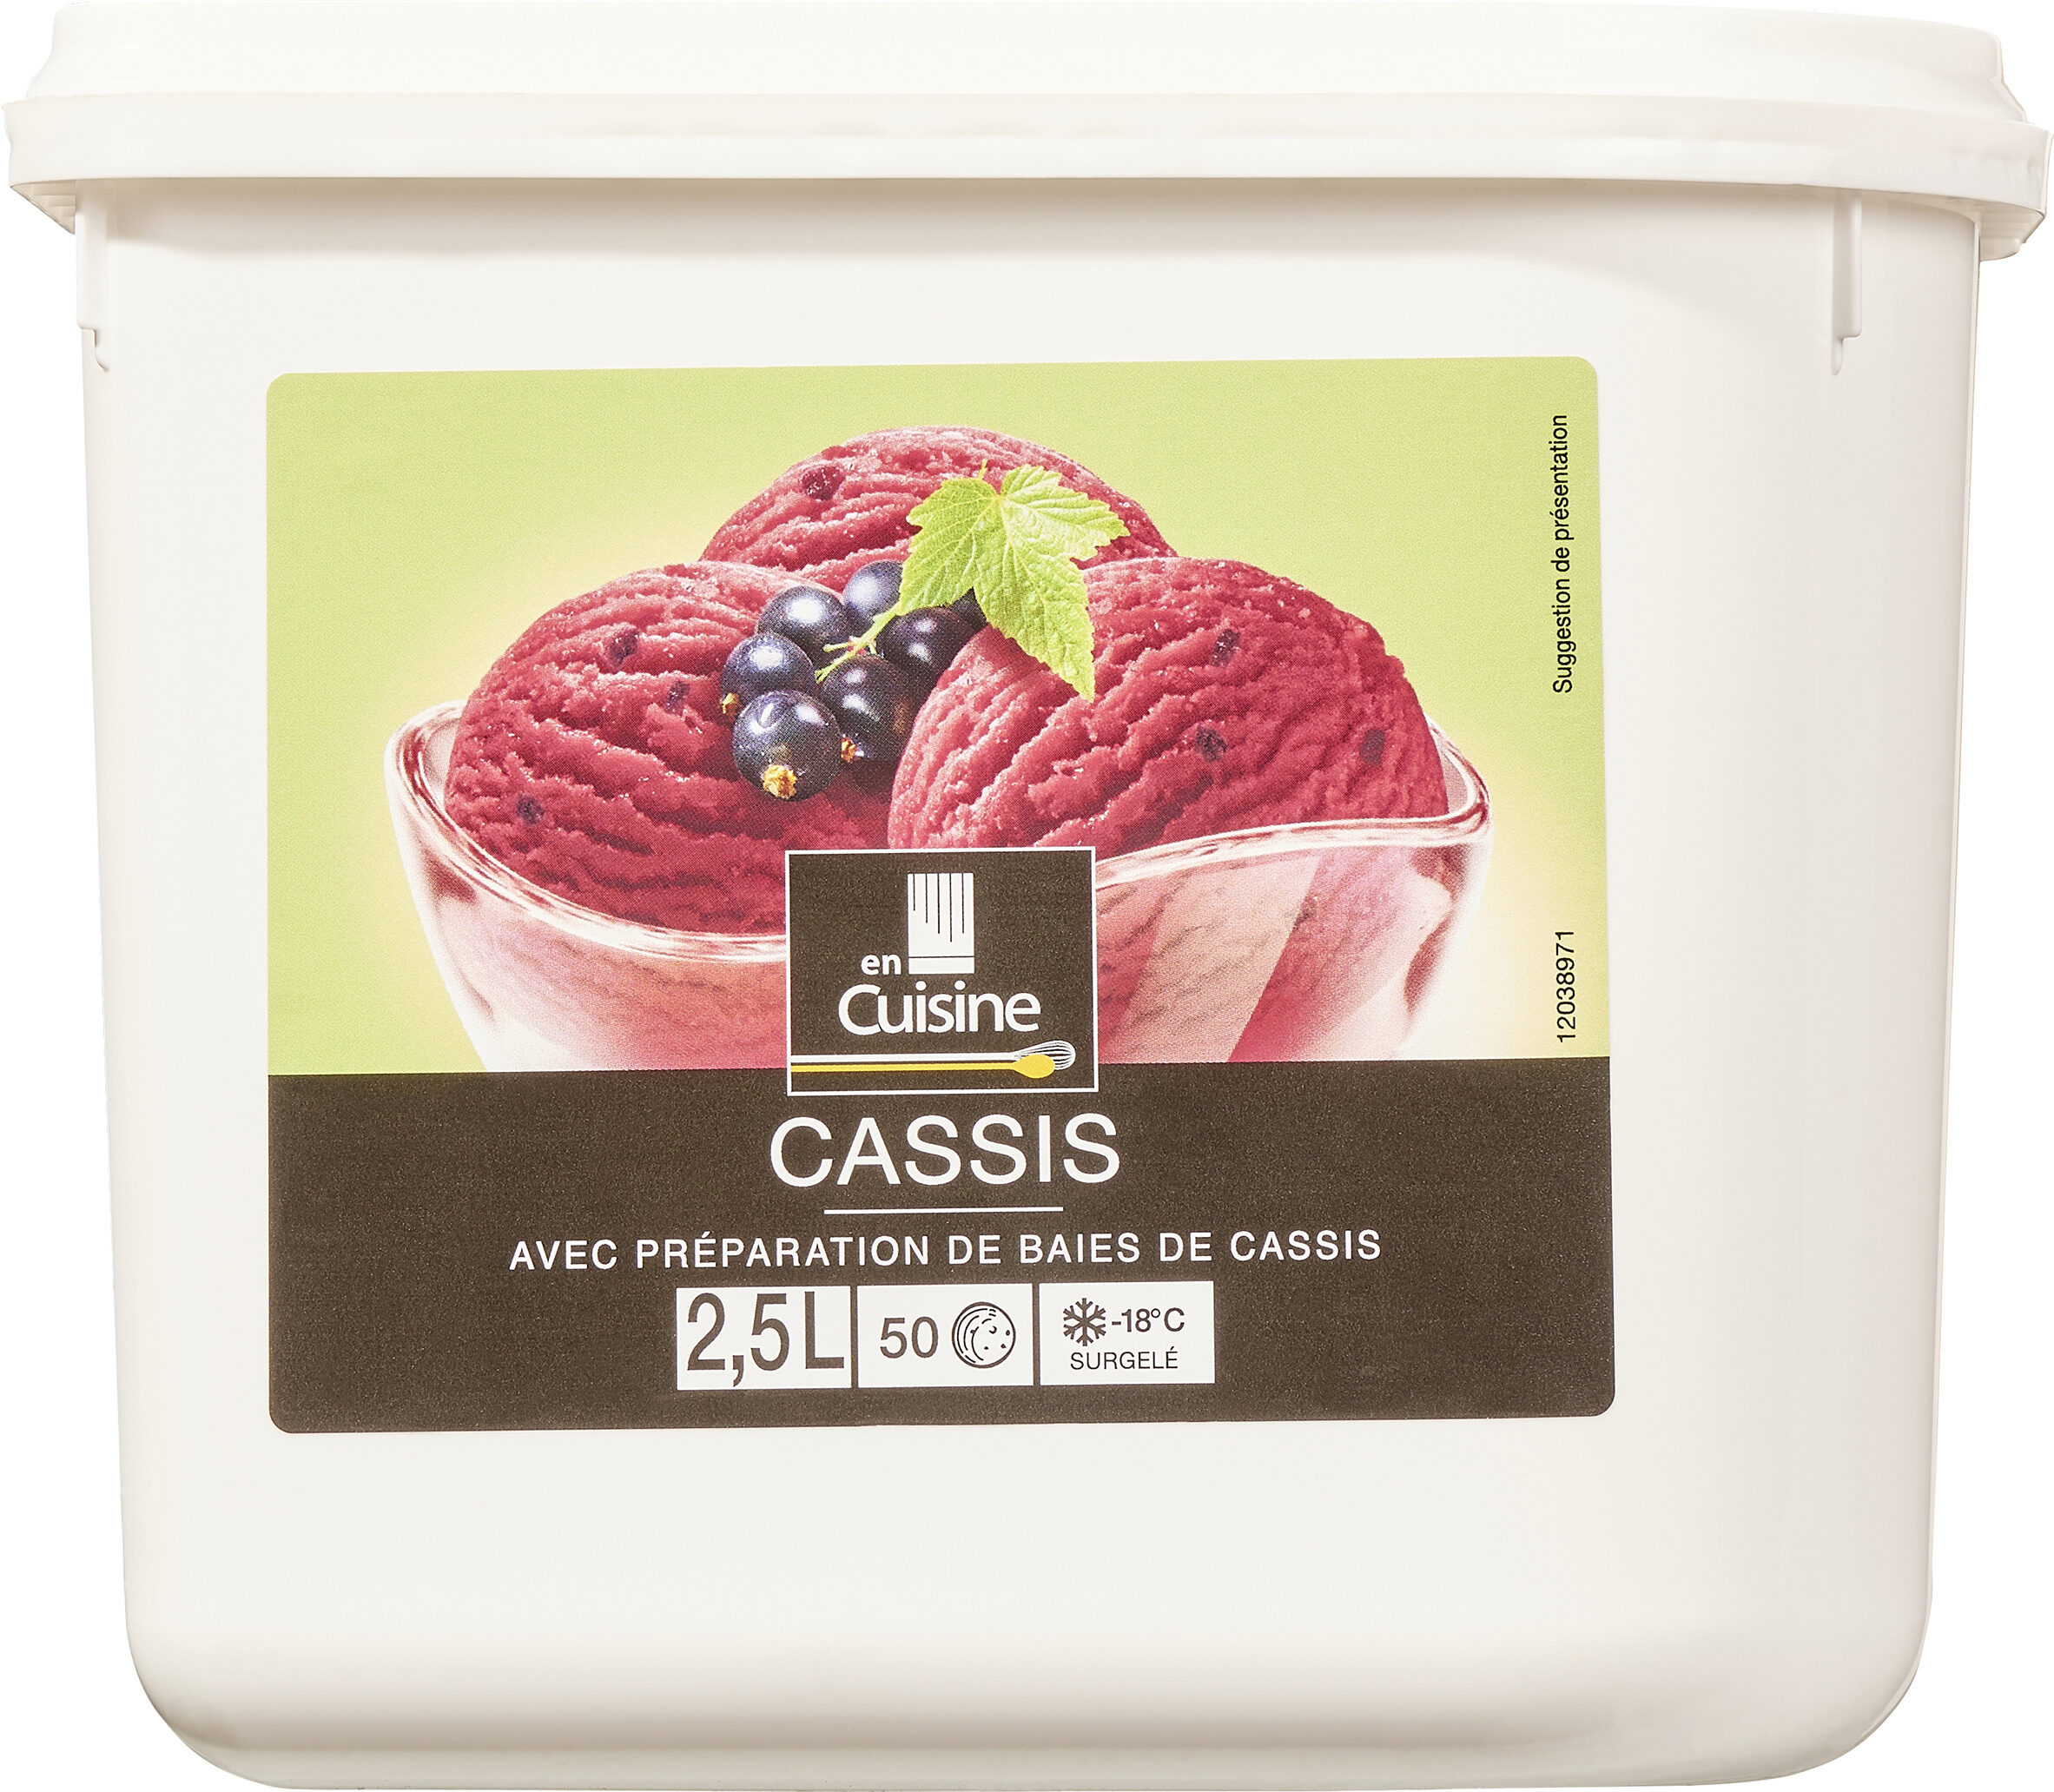 Sorbet cassis - Product - fr